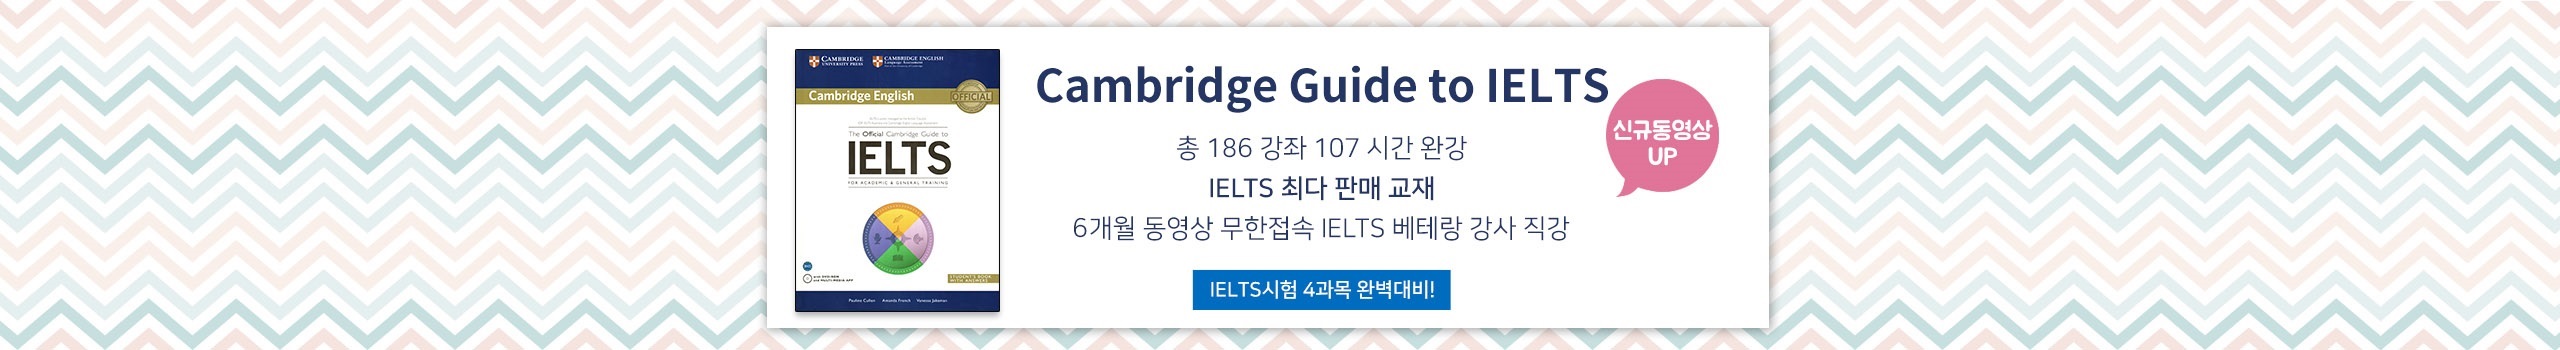 guide to IELTS Ī